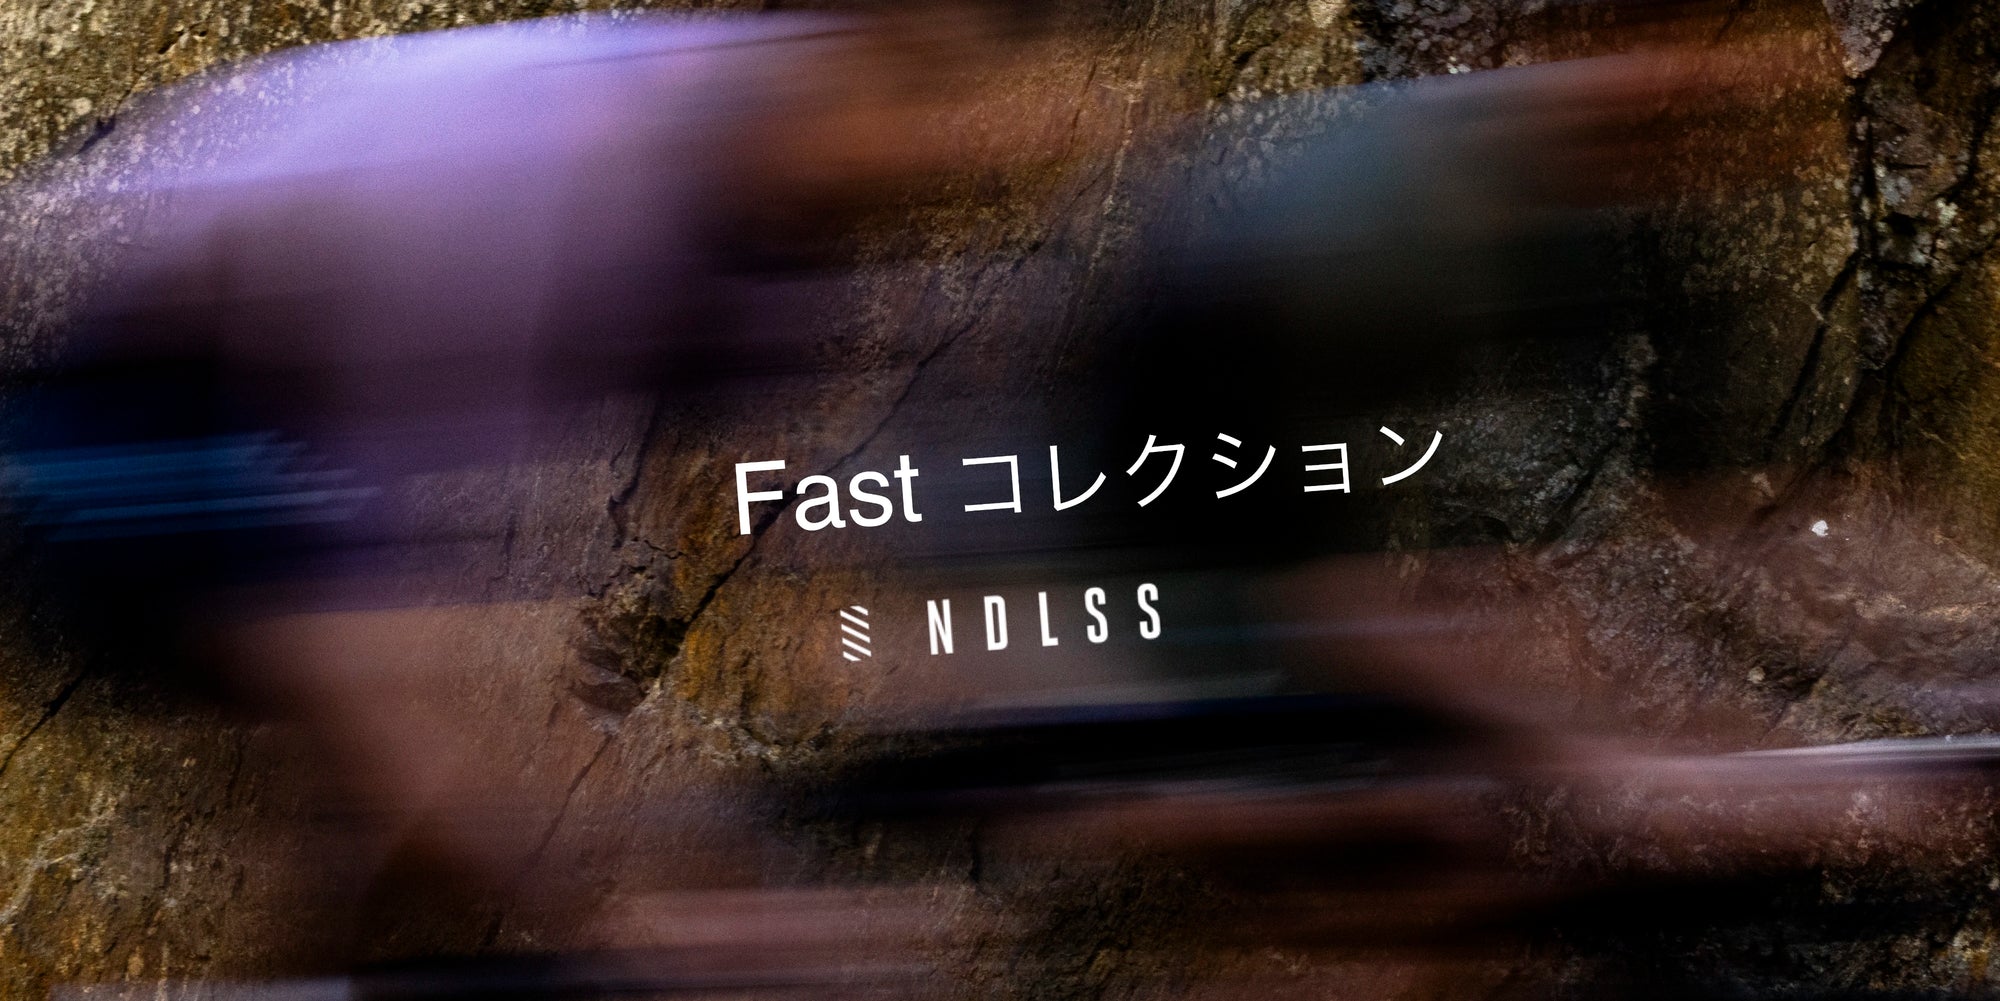 NDLSS Fast ササイクリングウェア | CYCLISM